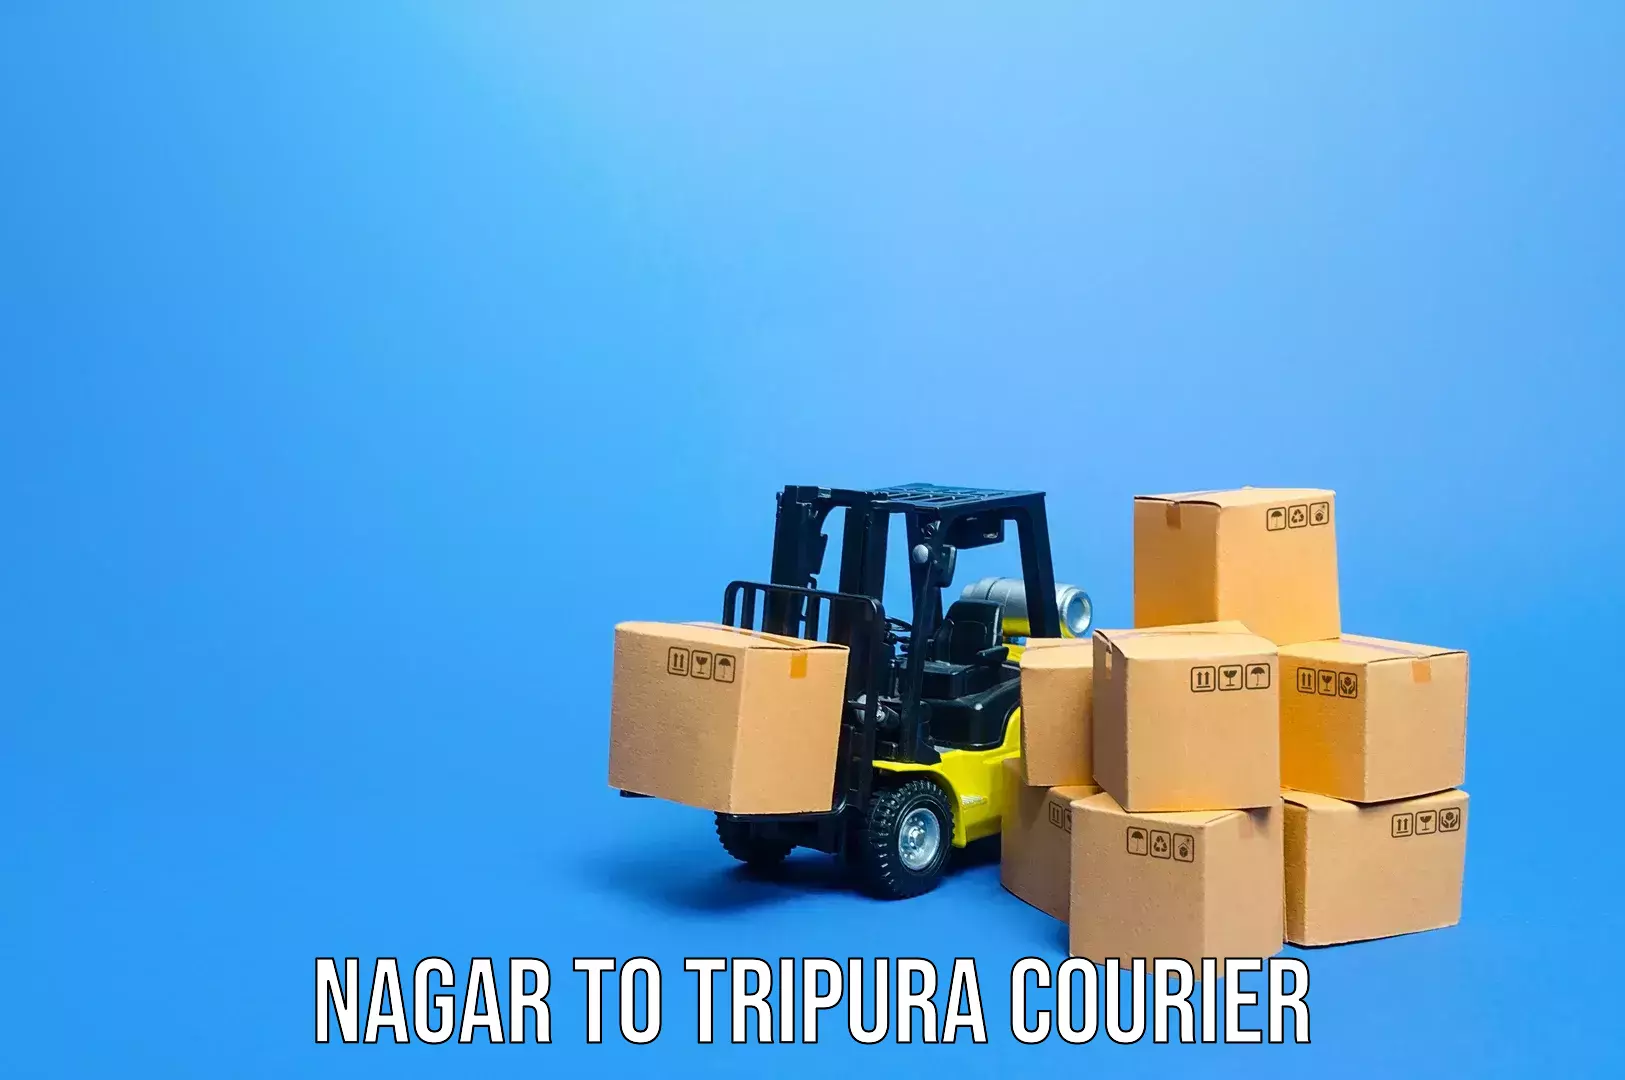 Luggage shipment specialists Nagar to Tripura